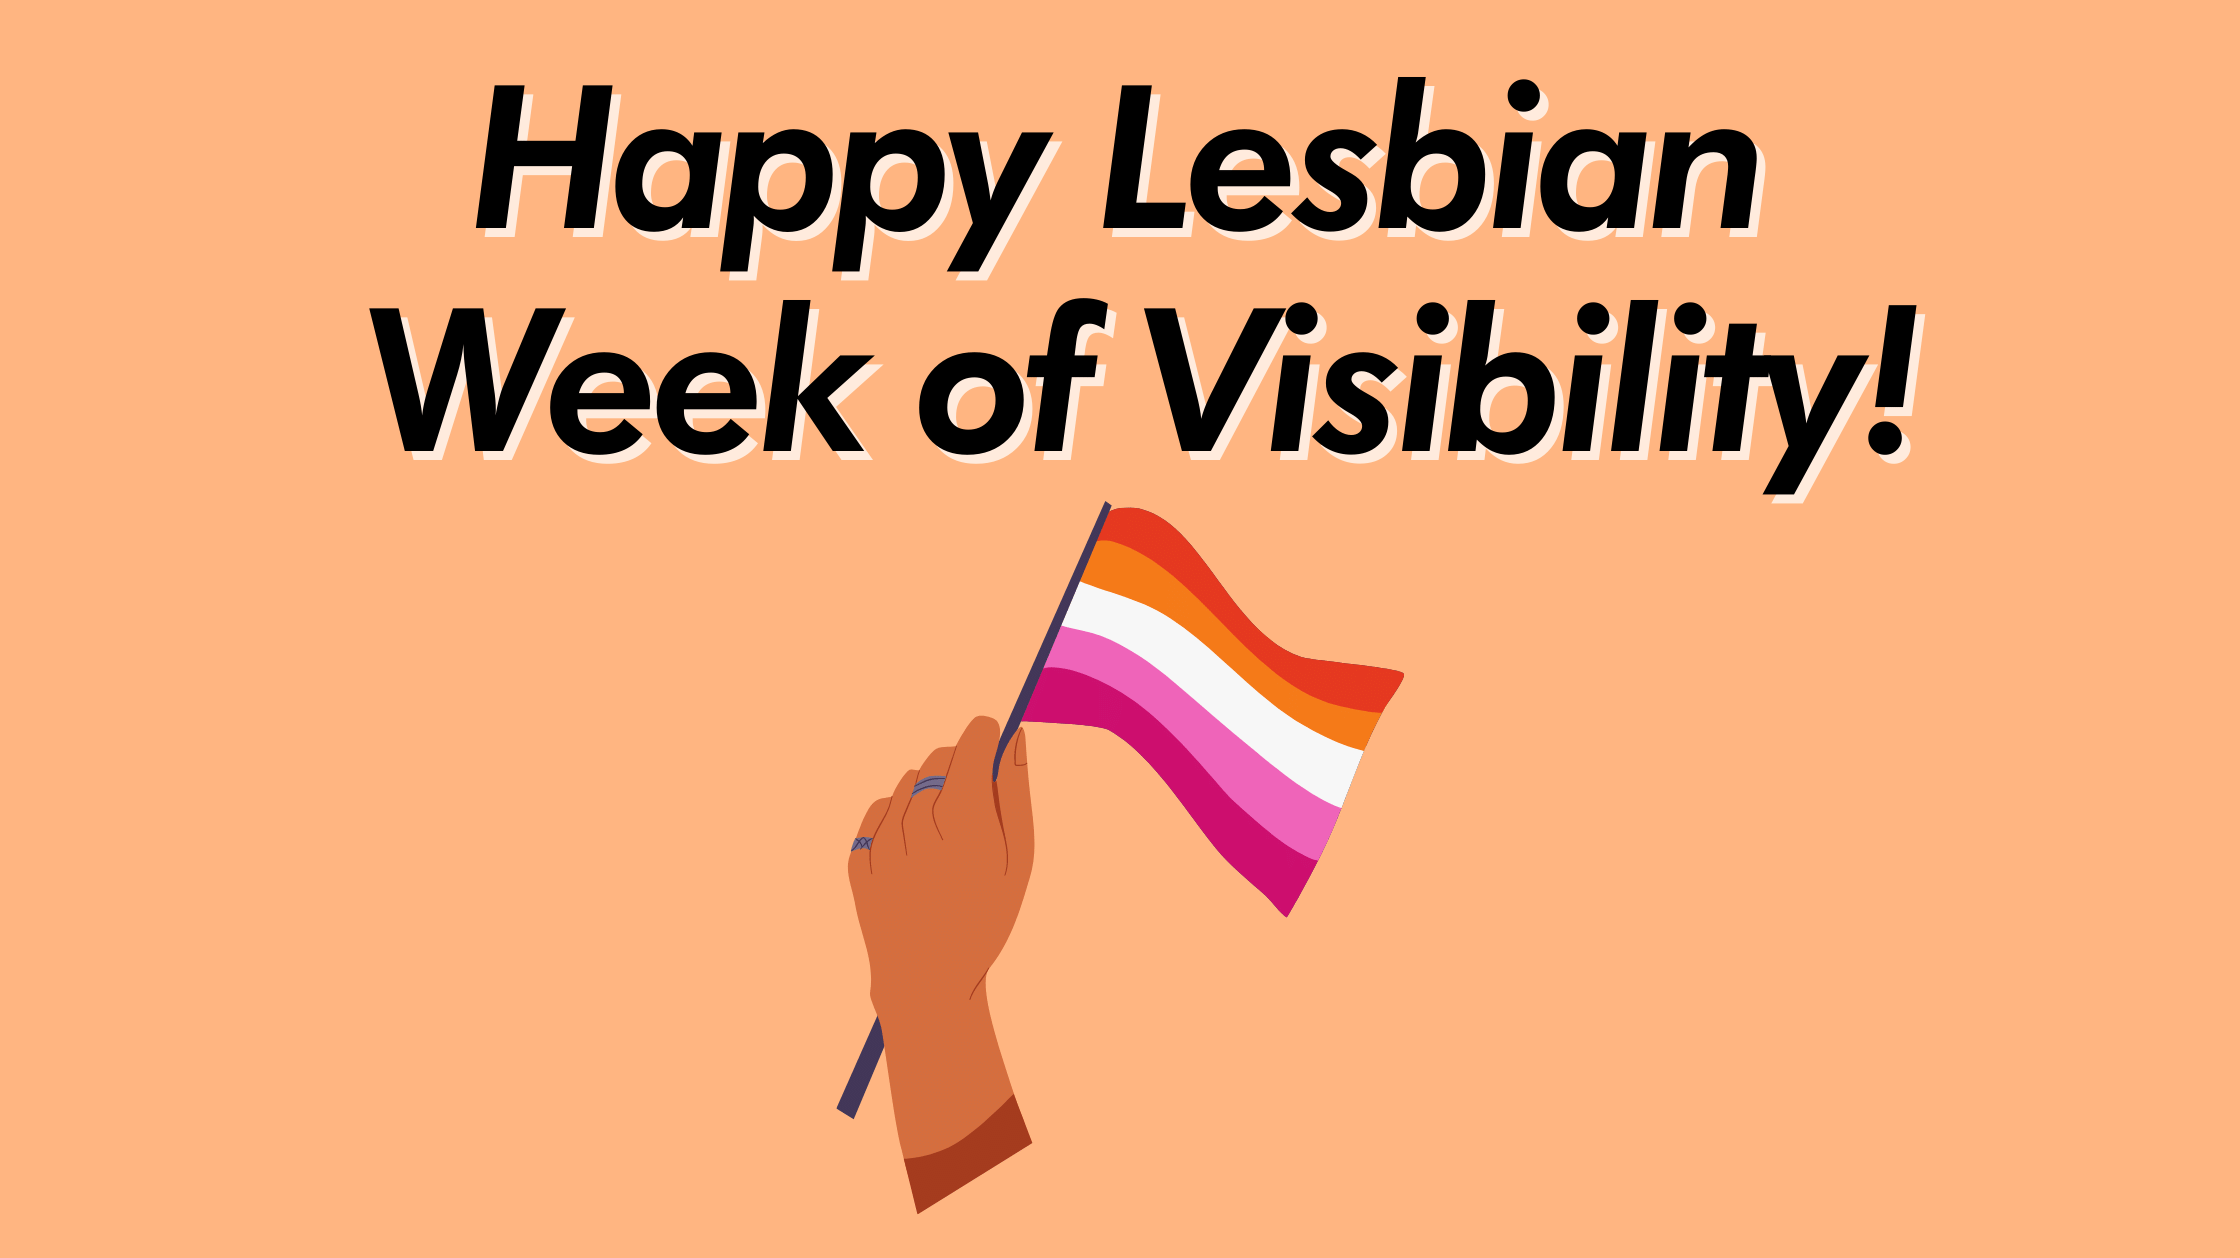 It's Lesbian Visibility Week!